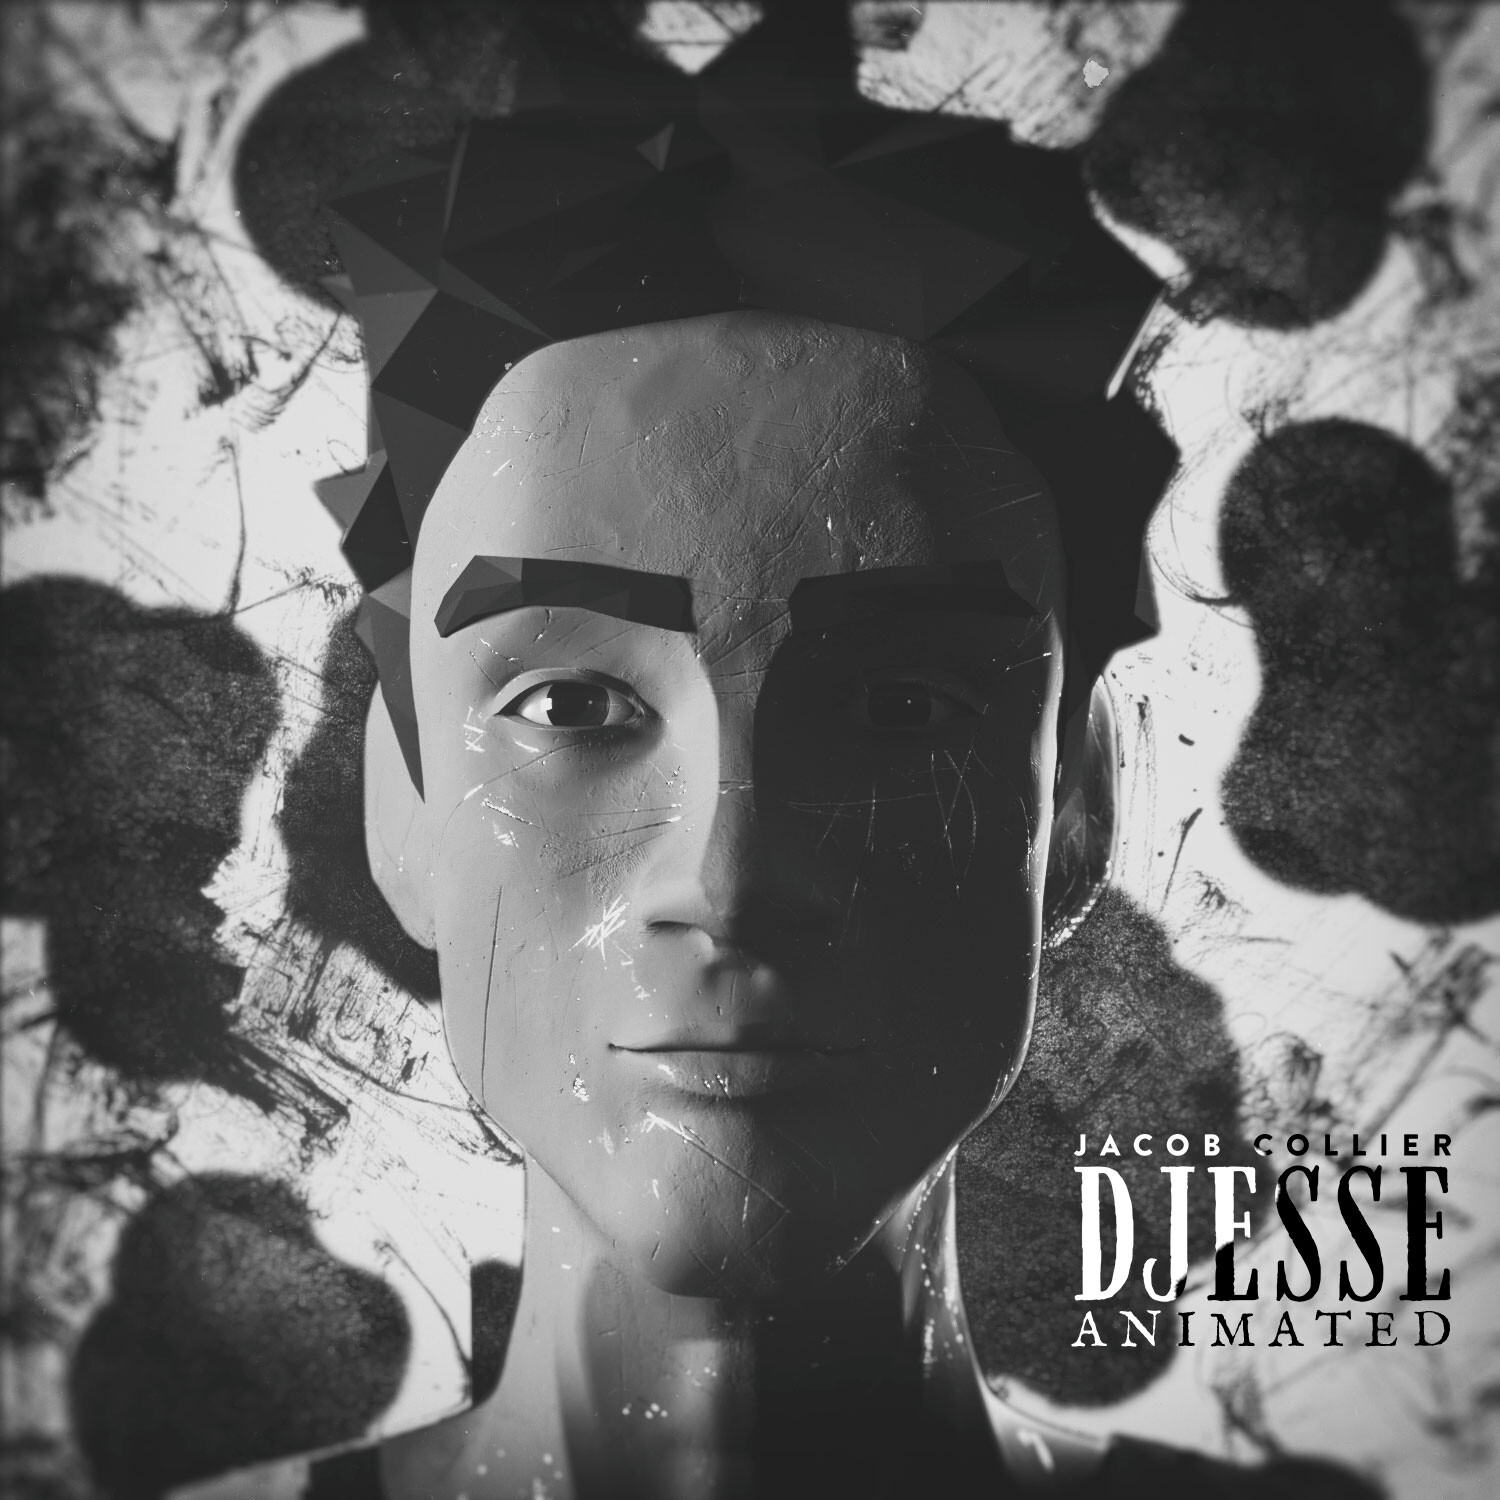 Portrait made as a Djesse style album cover